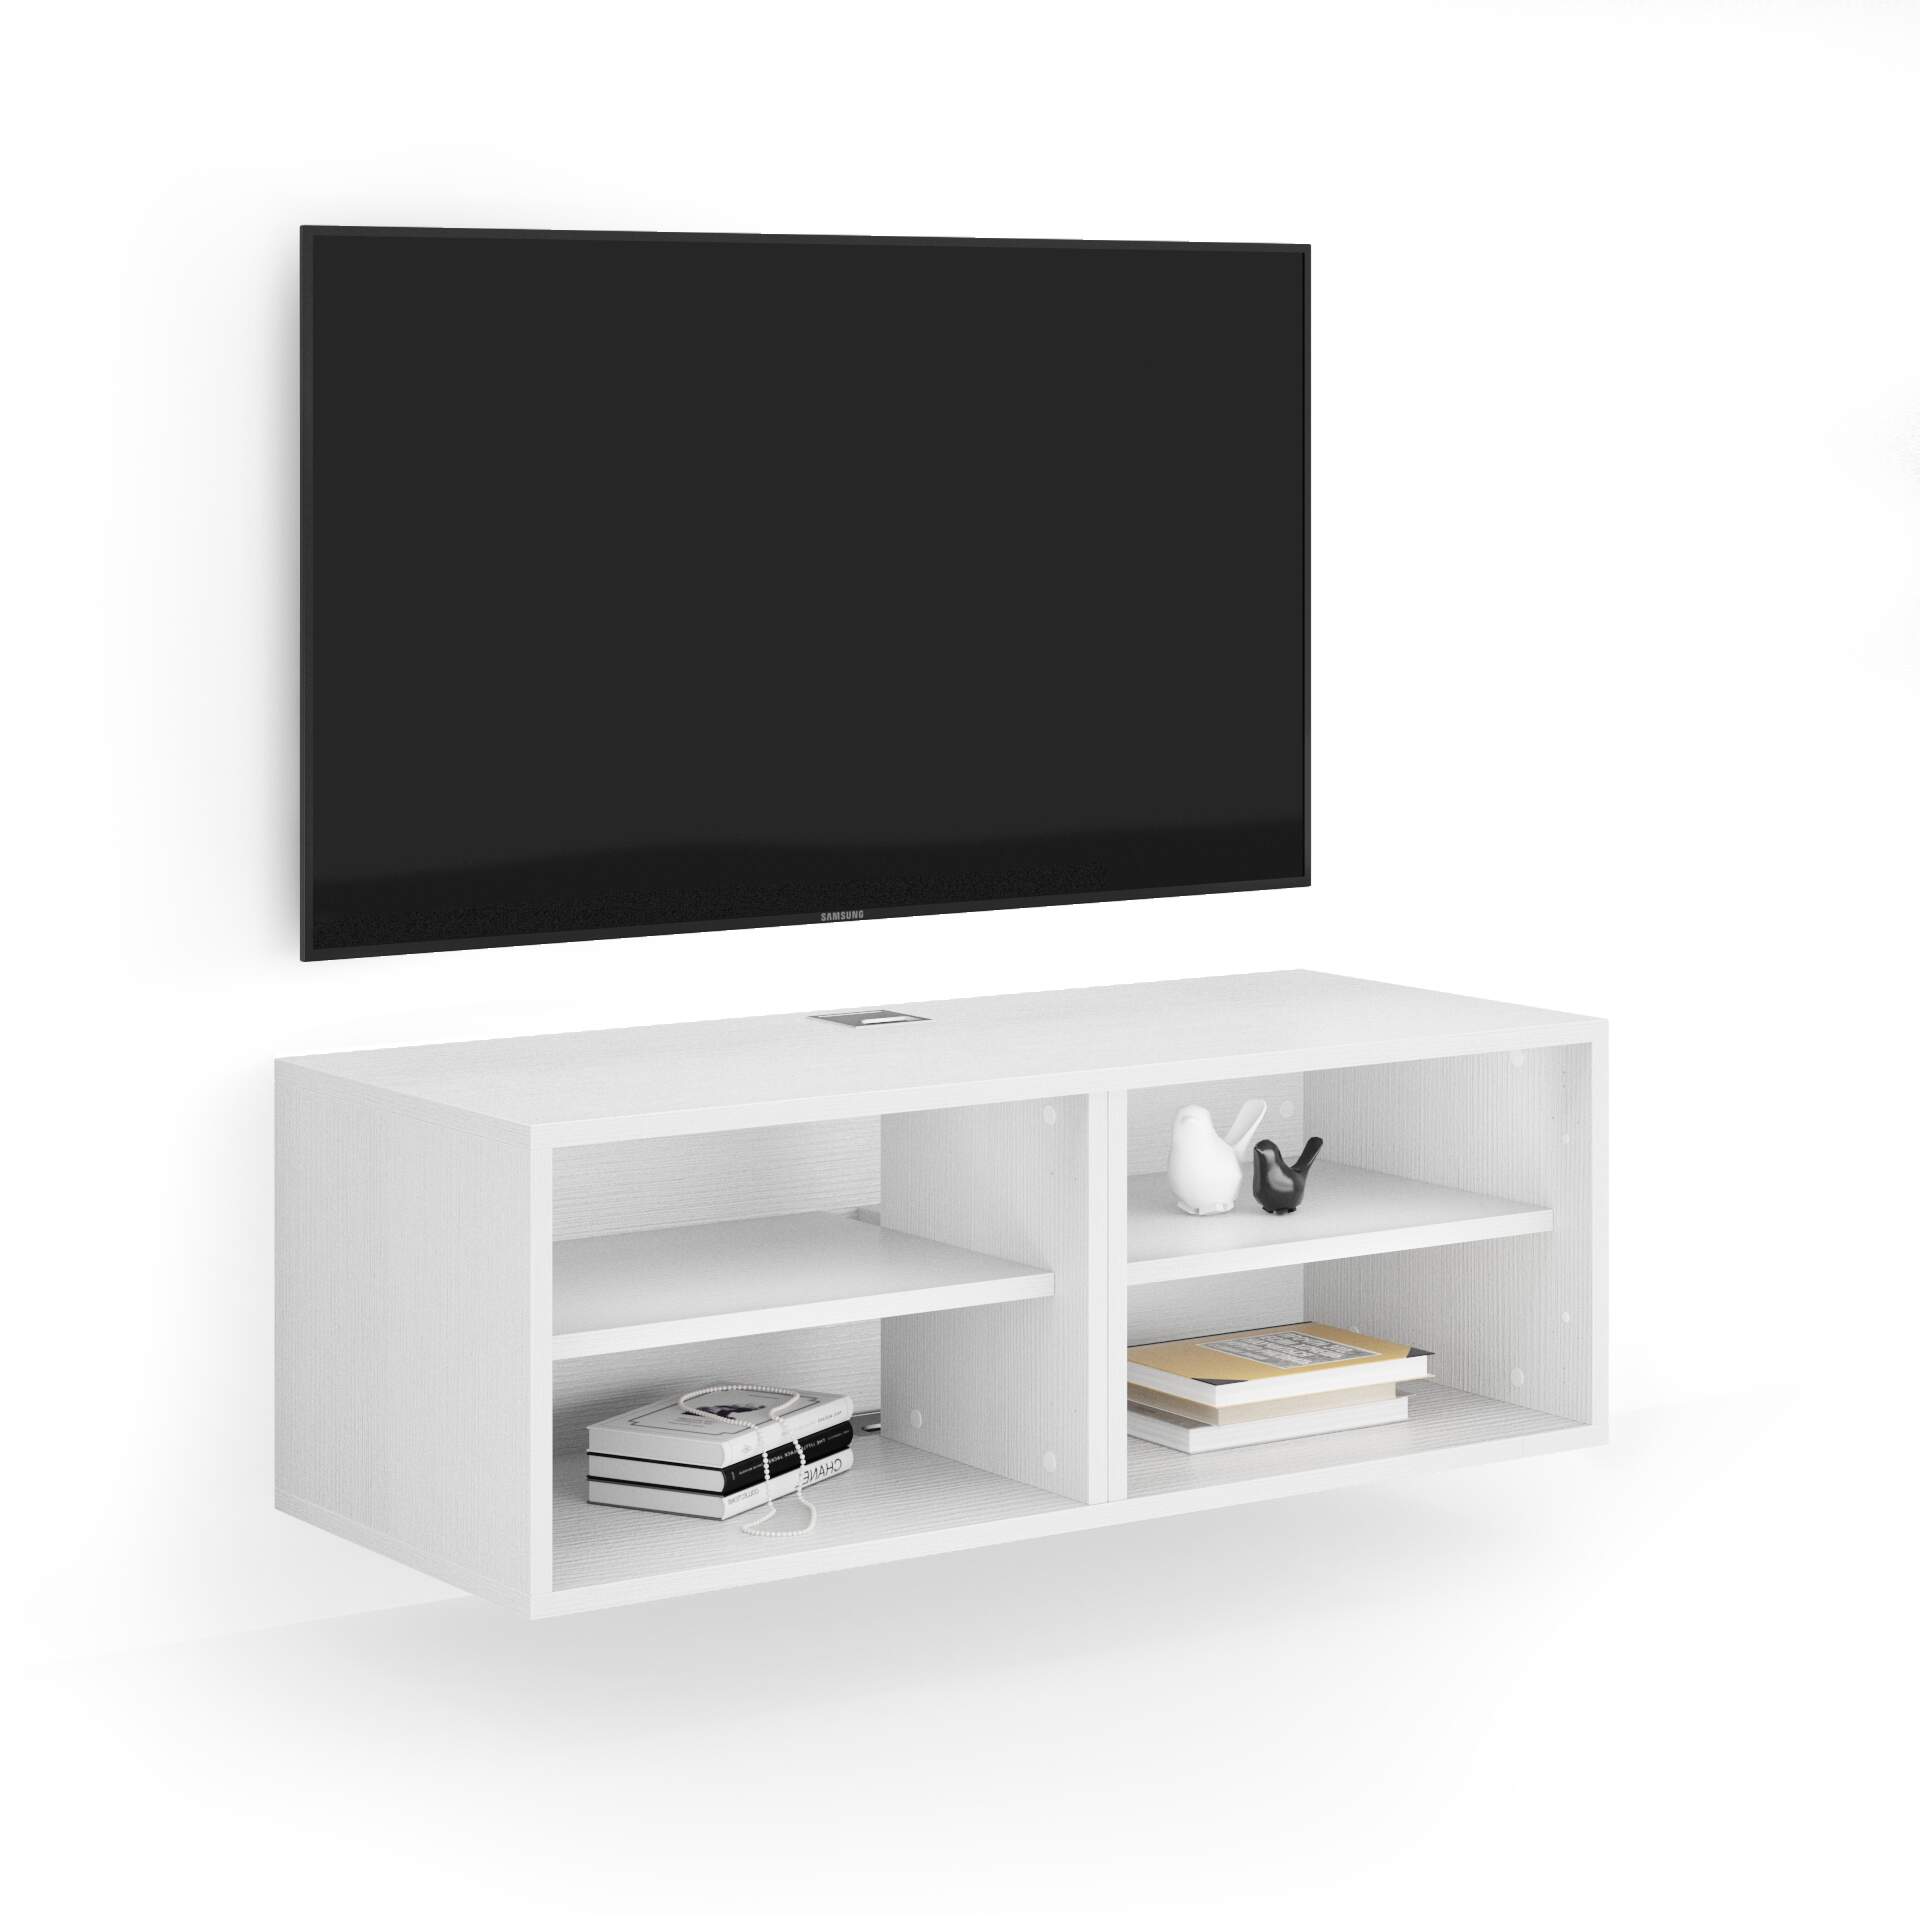 Mobili Fiver Mueble TV suspendido X, color fresno blanco